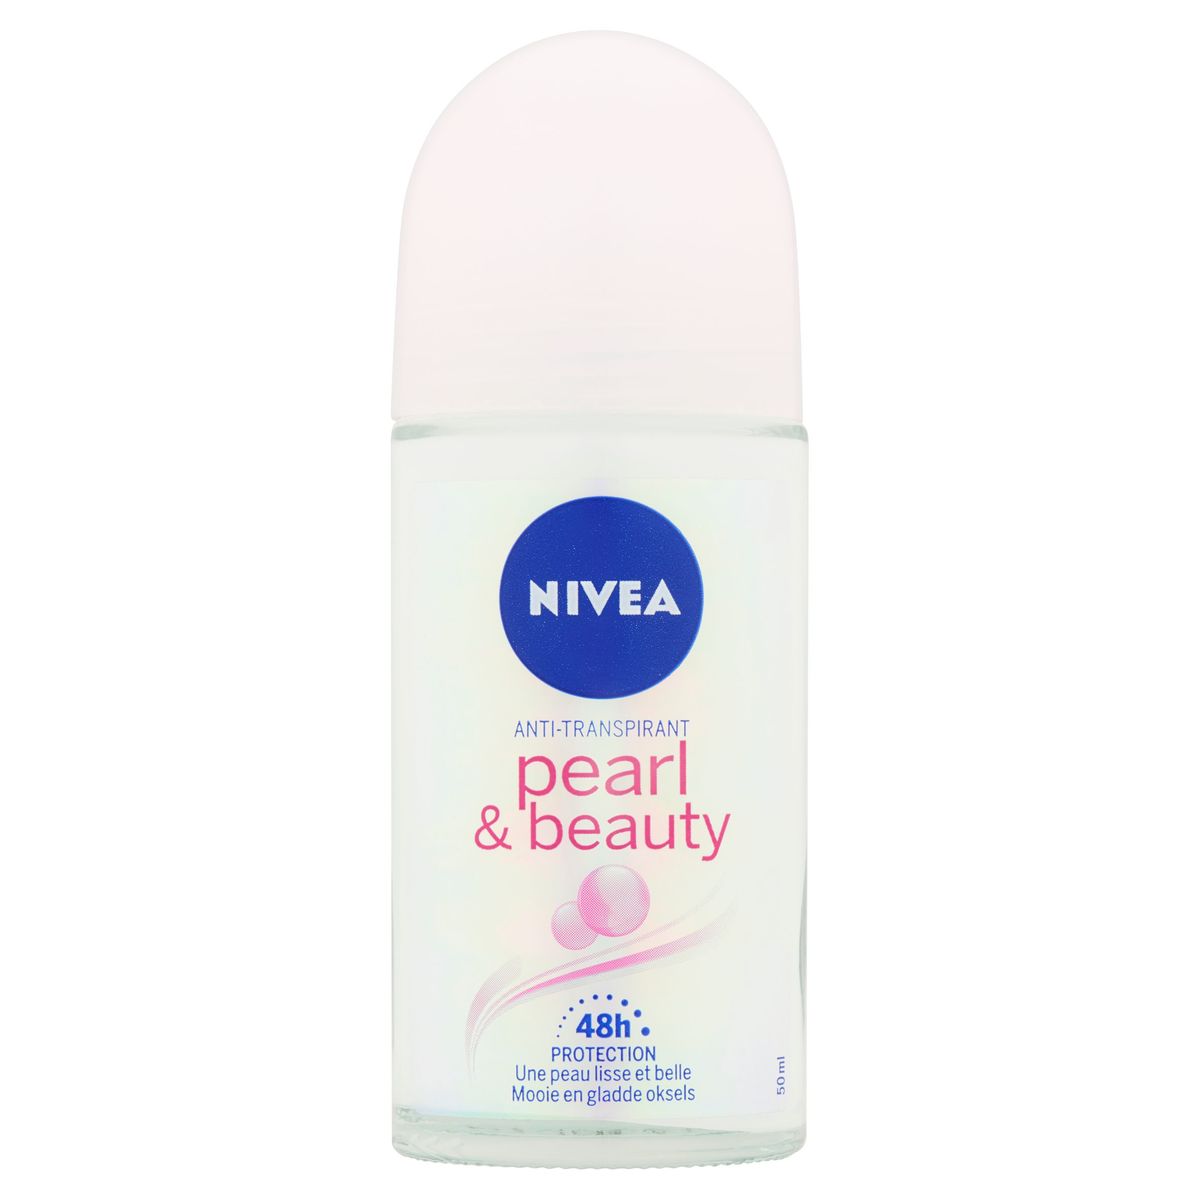 Nivea Anti-Transpirant Pearl & Beauty 48h Protection 50 ml